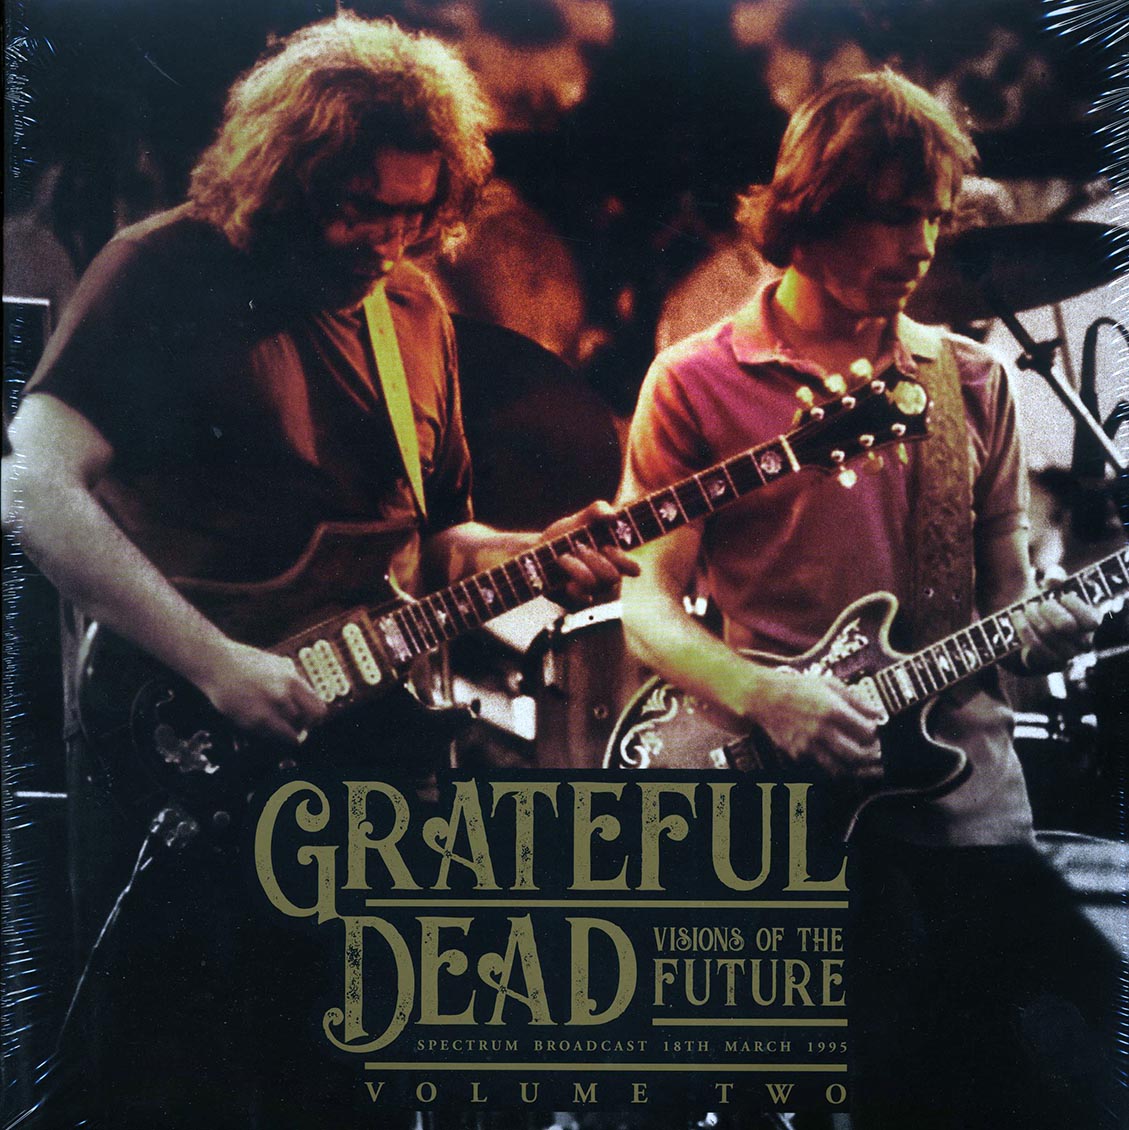 Grateful Dead - Visions Of The Future Volume 2: Spectrum Broadcast 18th March 1995 (2xLP) - Vinyl LP